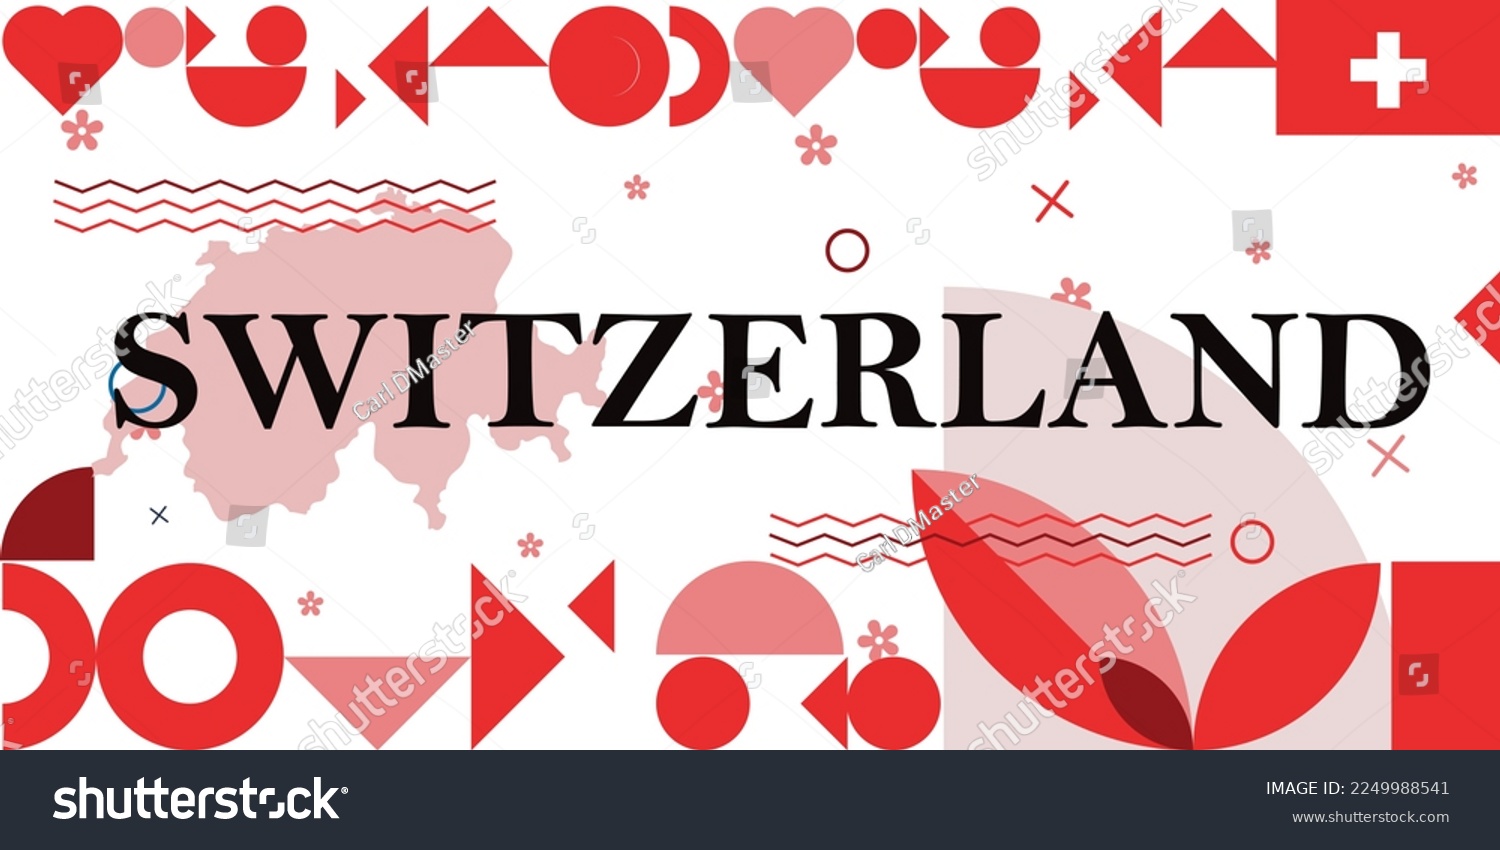 SVG of Switzerland vector illustration. Happy independence day anniversary celebration banner. Symbols, patterns and national flag.
 svg